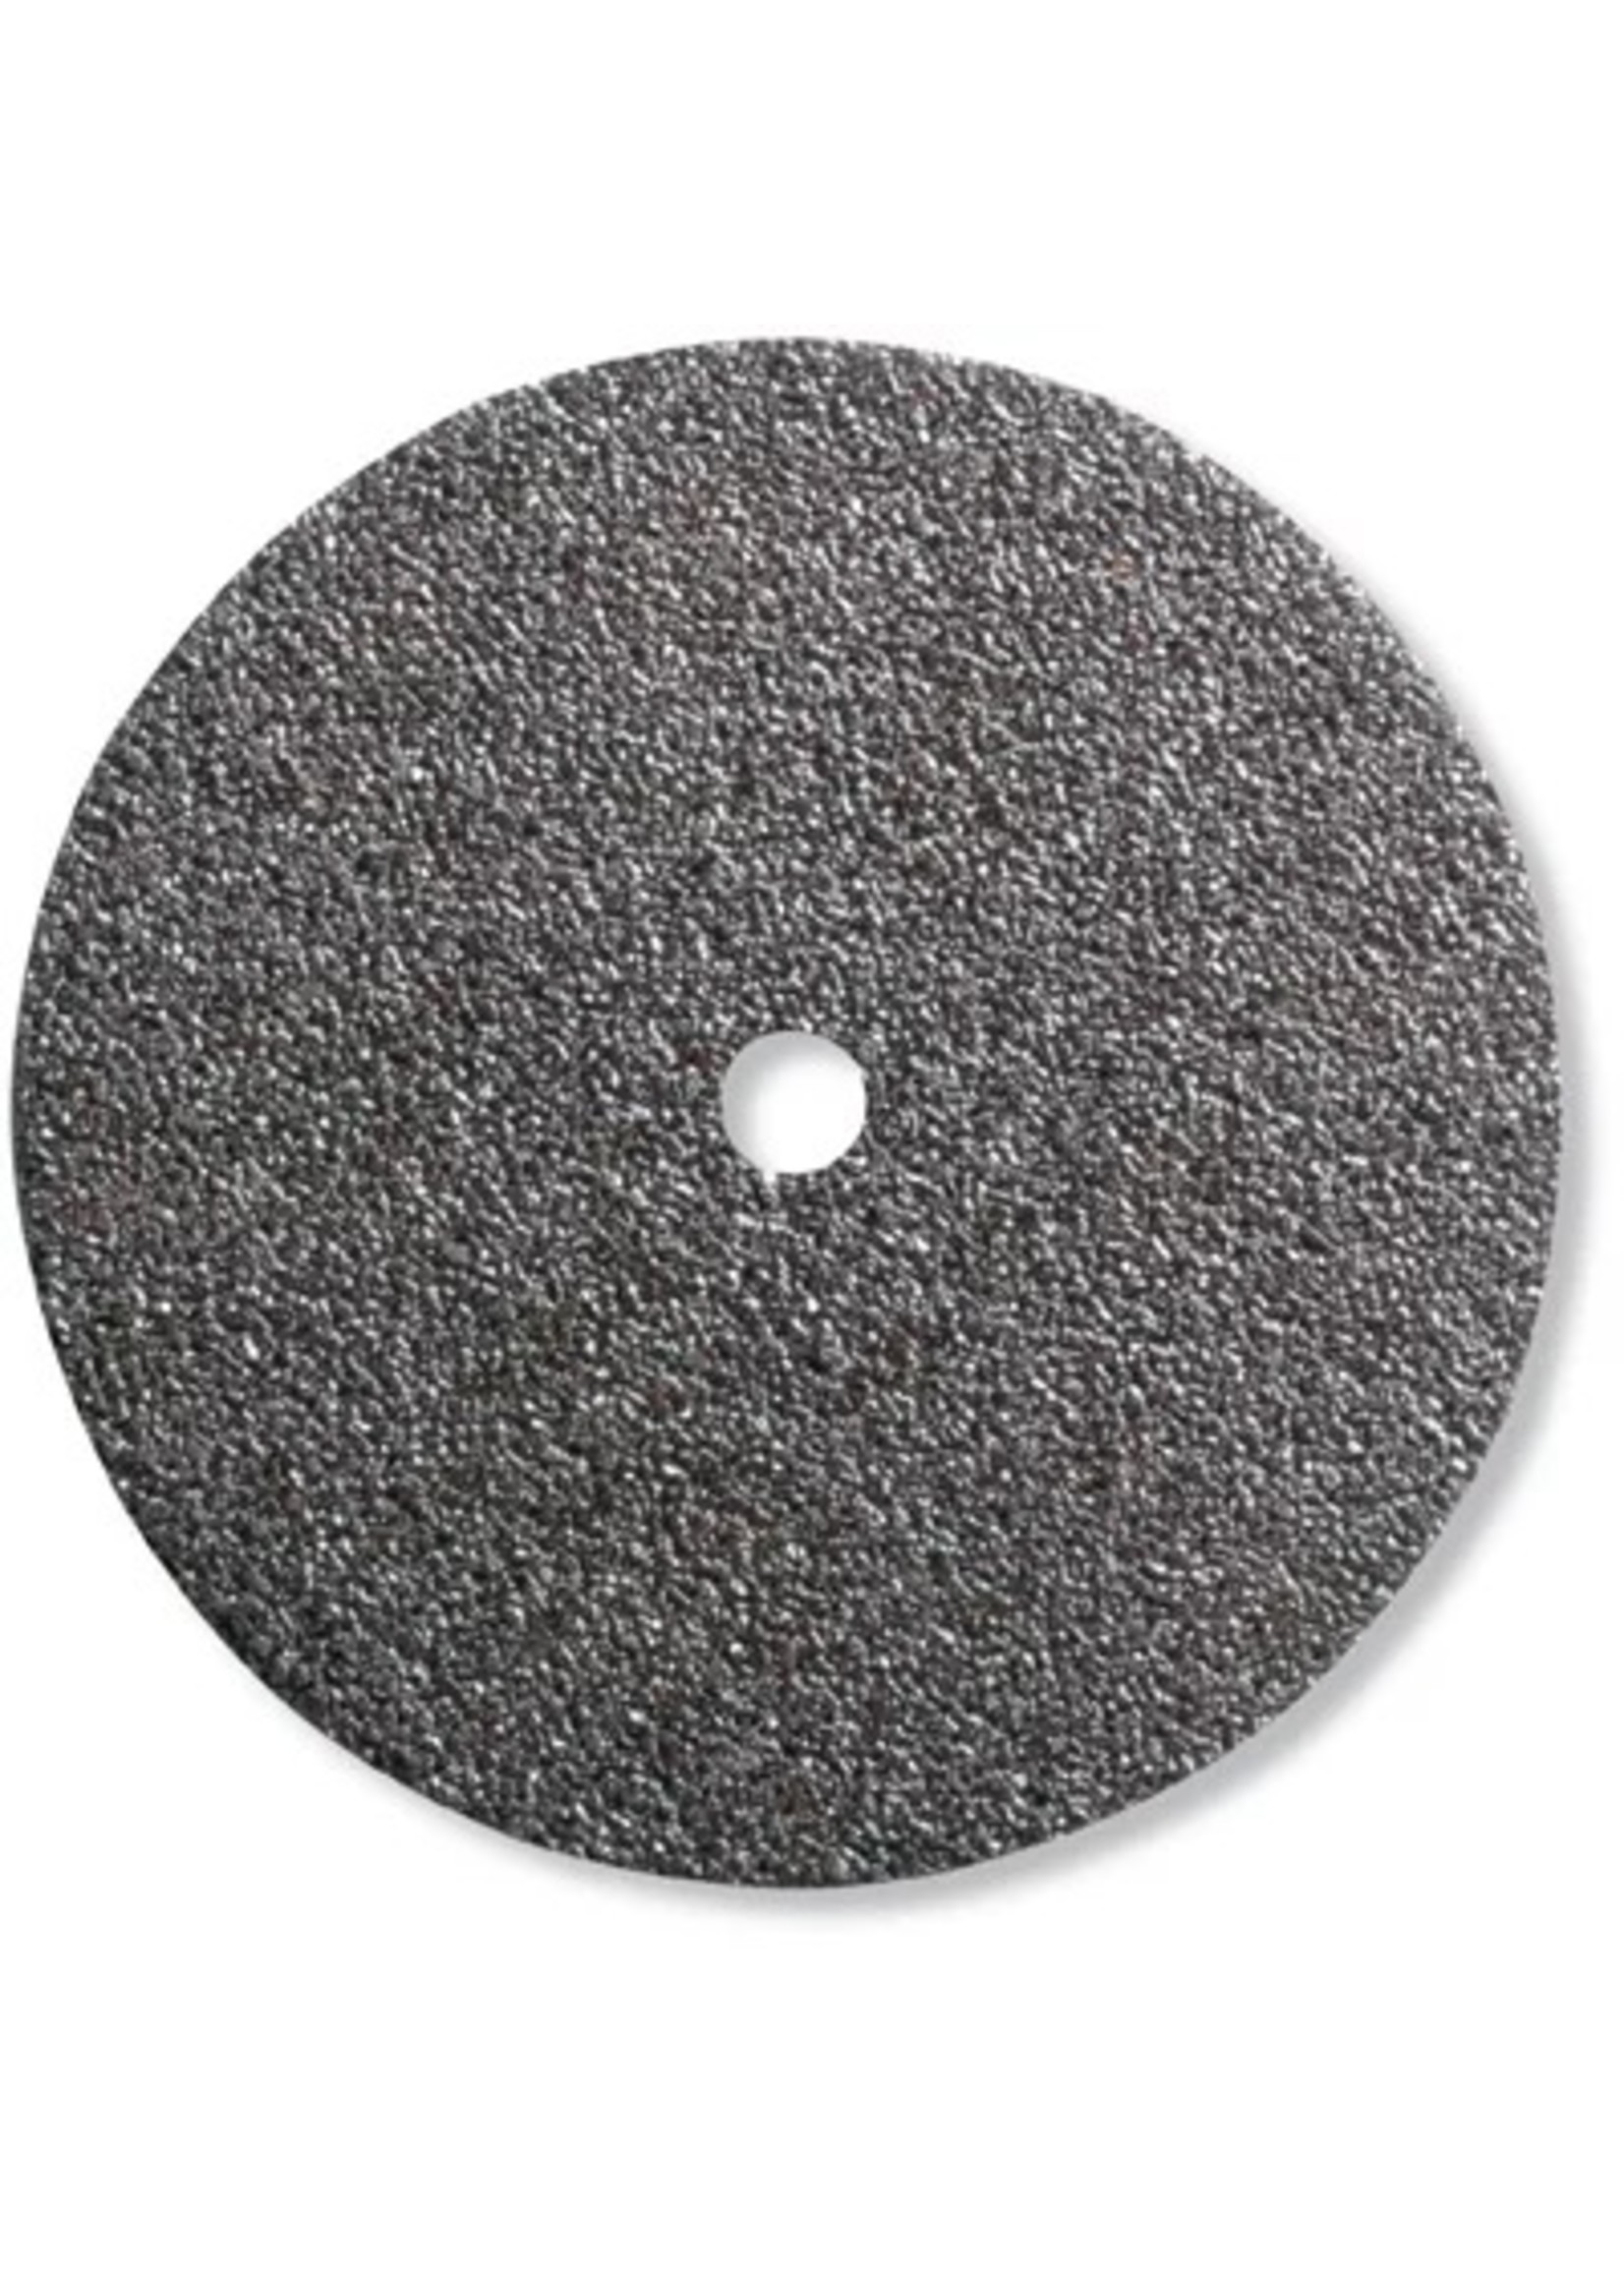 Dremel 541 - 7/8" Aluminum Oxide Grinding Wheel